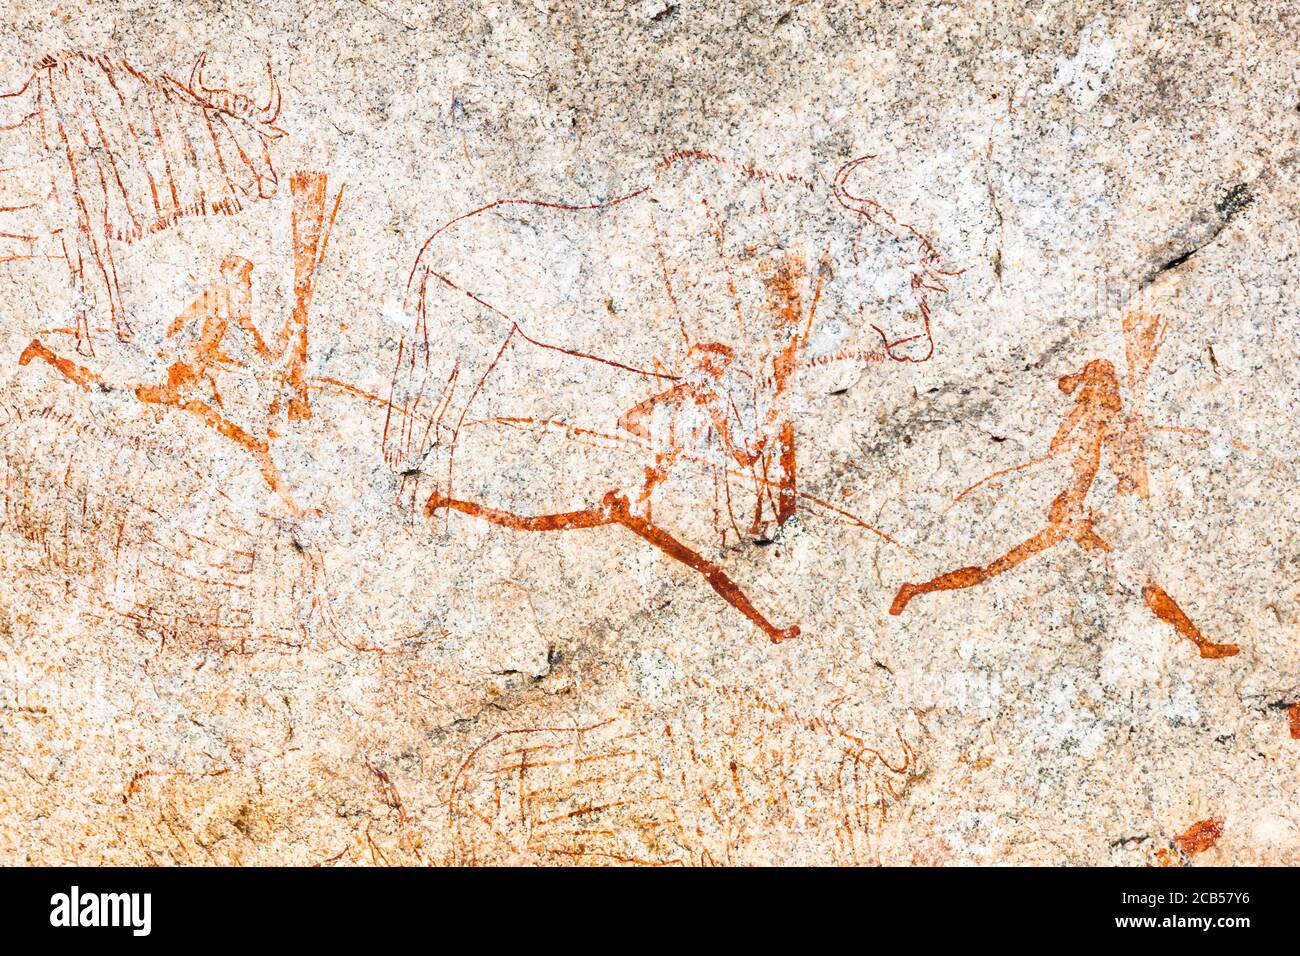 Matobo hills, 'White Rhino cave' rock painting site, rock art, Matobo National Park, suburbs of Bulawayo, Matabeleland South, Zimbabwe, Africa Stock Photo